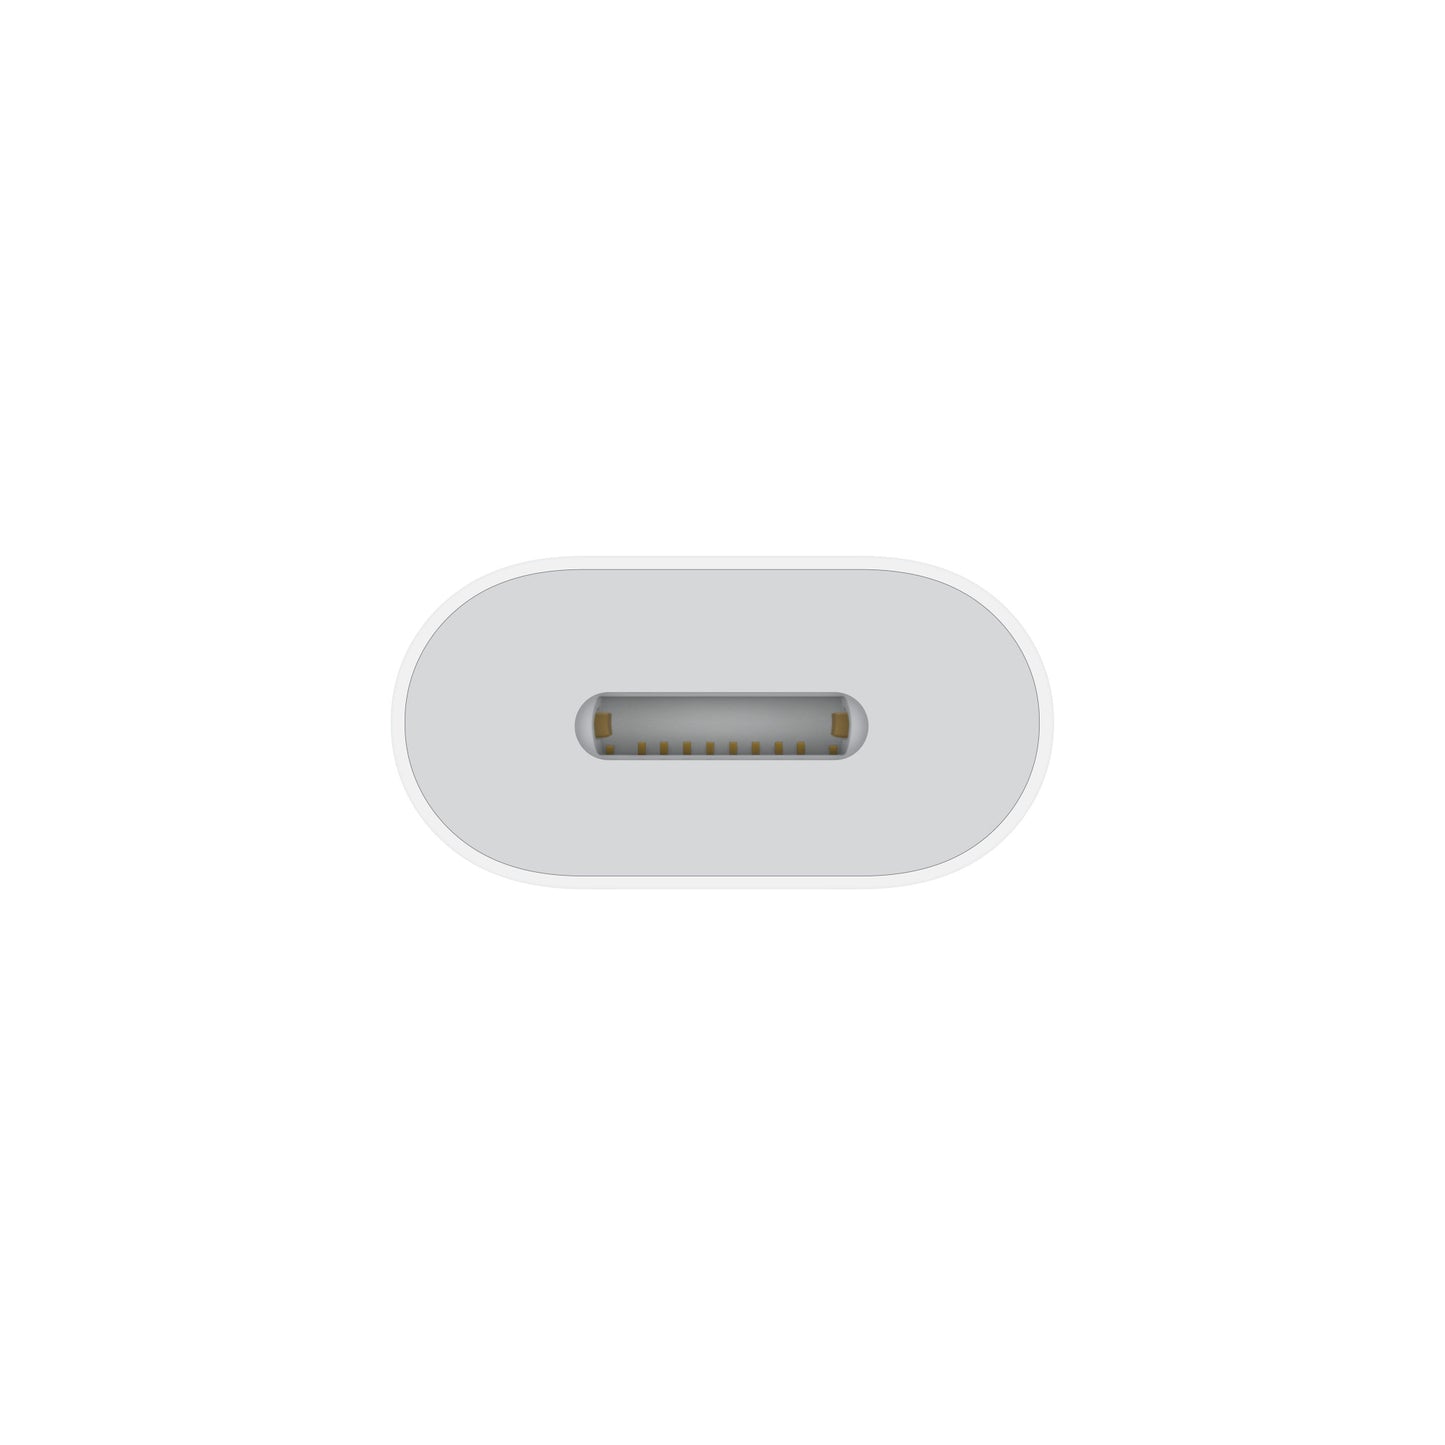 Apple adaptador de USB-C a Lightning